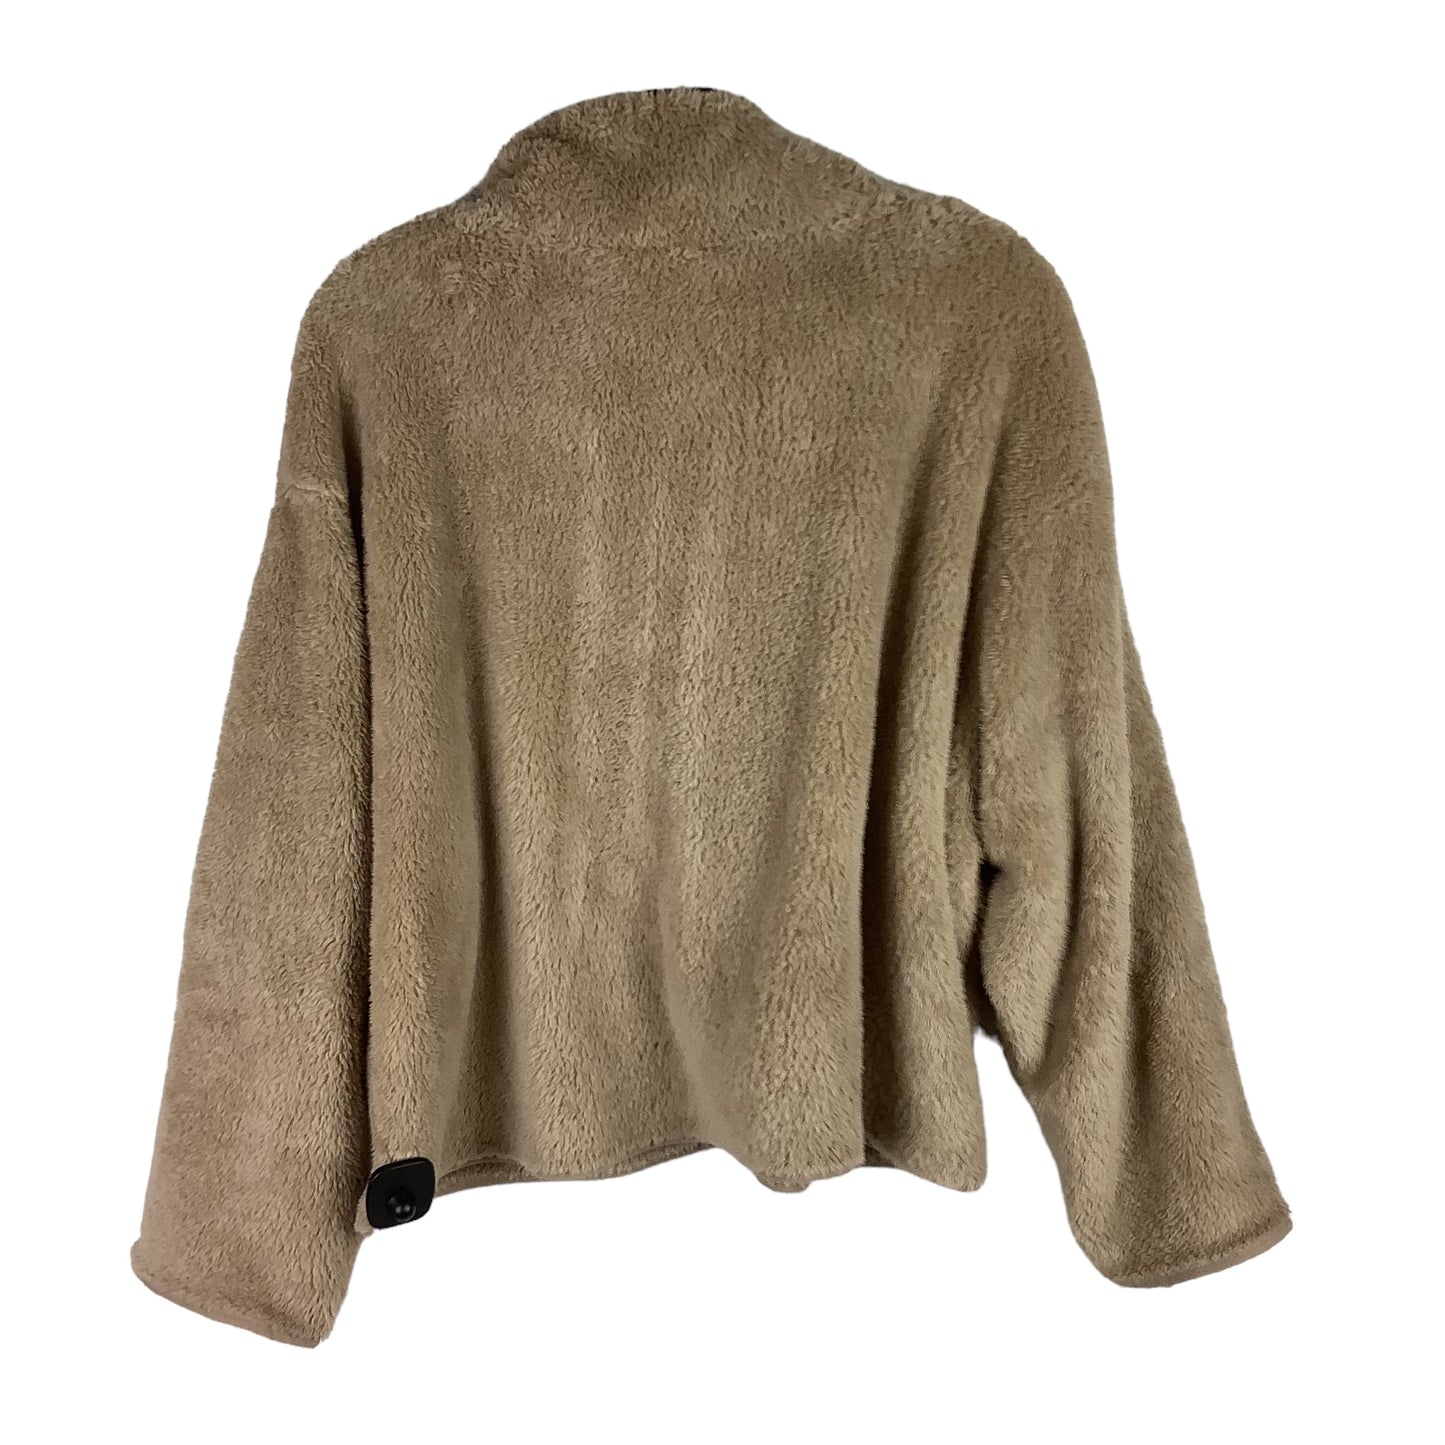 Jacket Fleece By H&m  Size: M